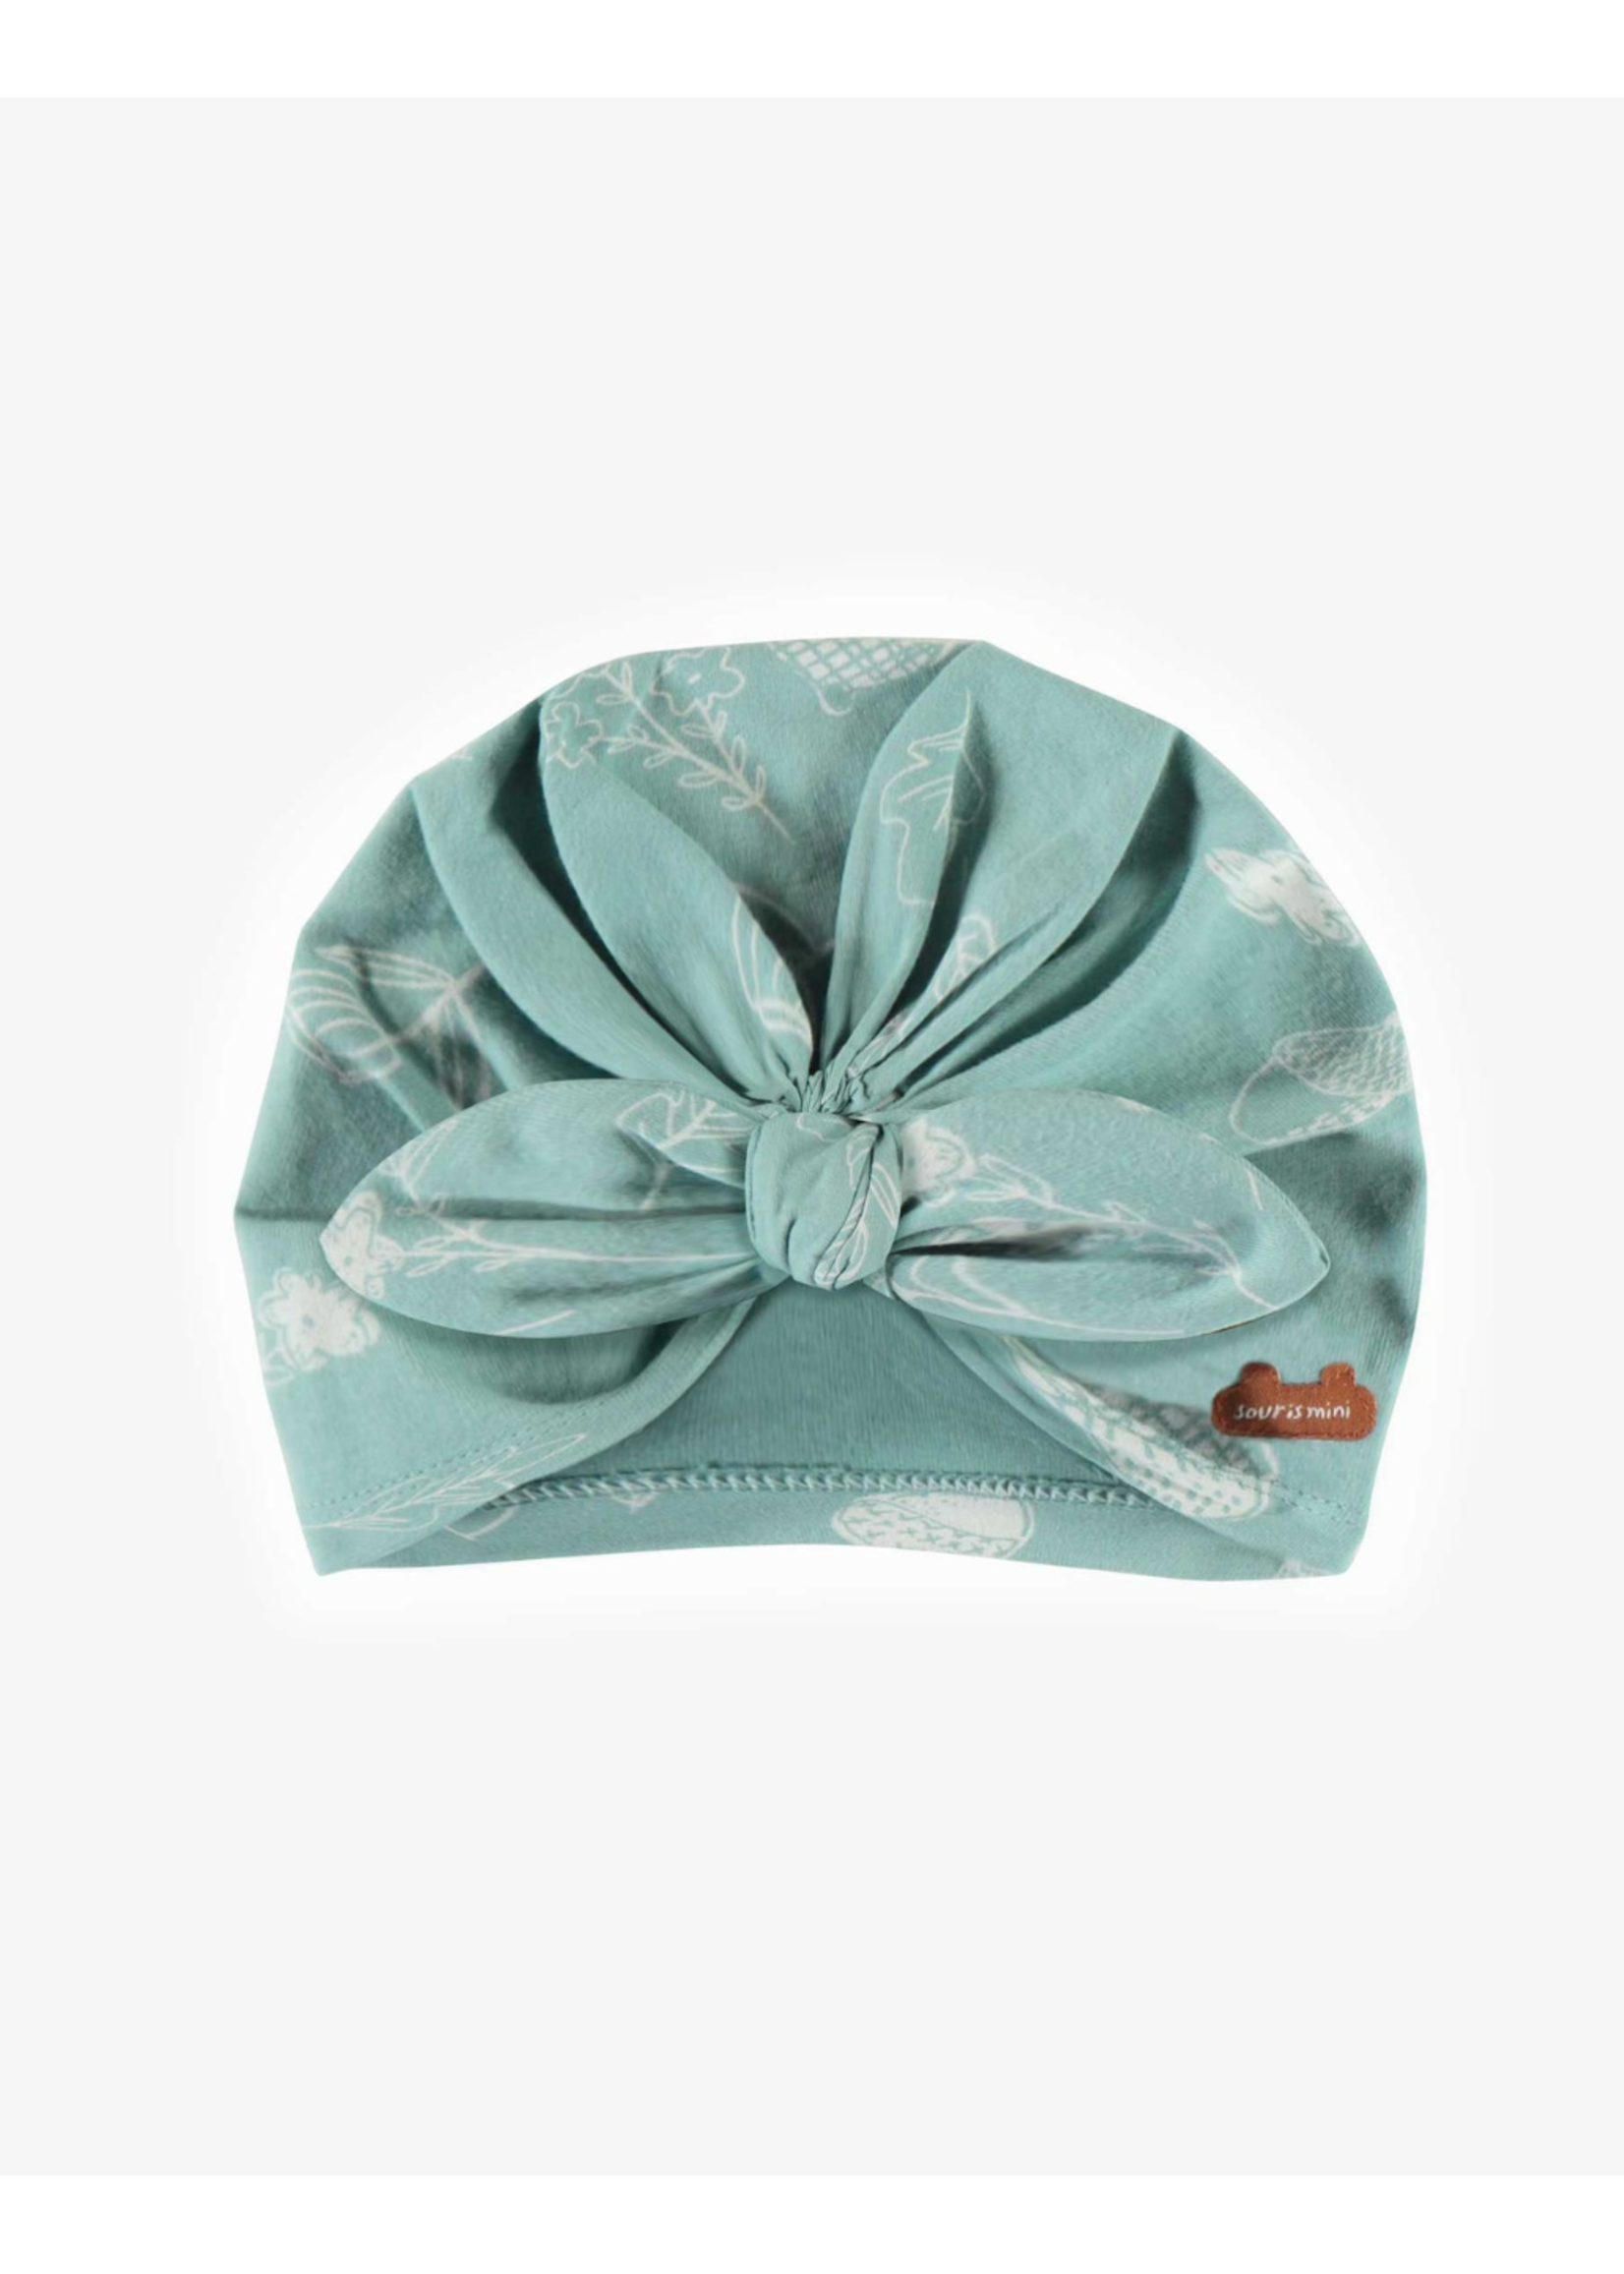 Souris Mini Souris Mini, Hazelnut Print Jersey Bow Hat || Light Turquois